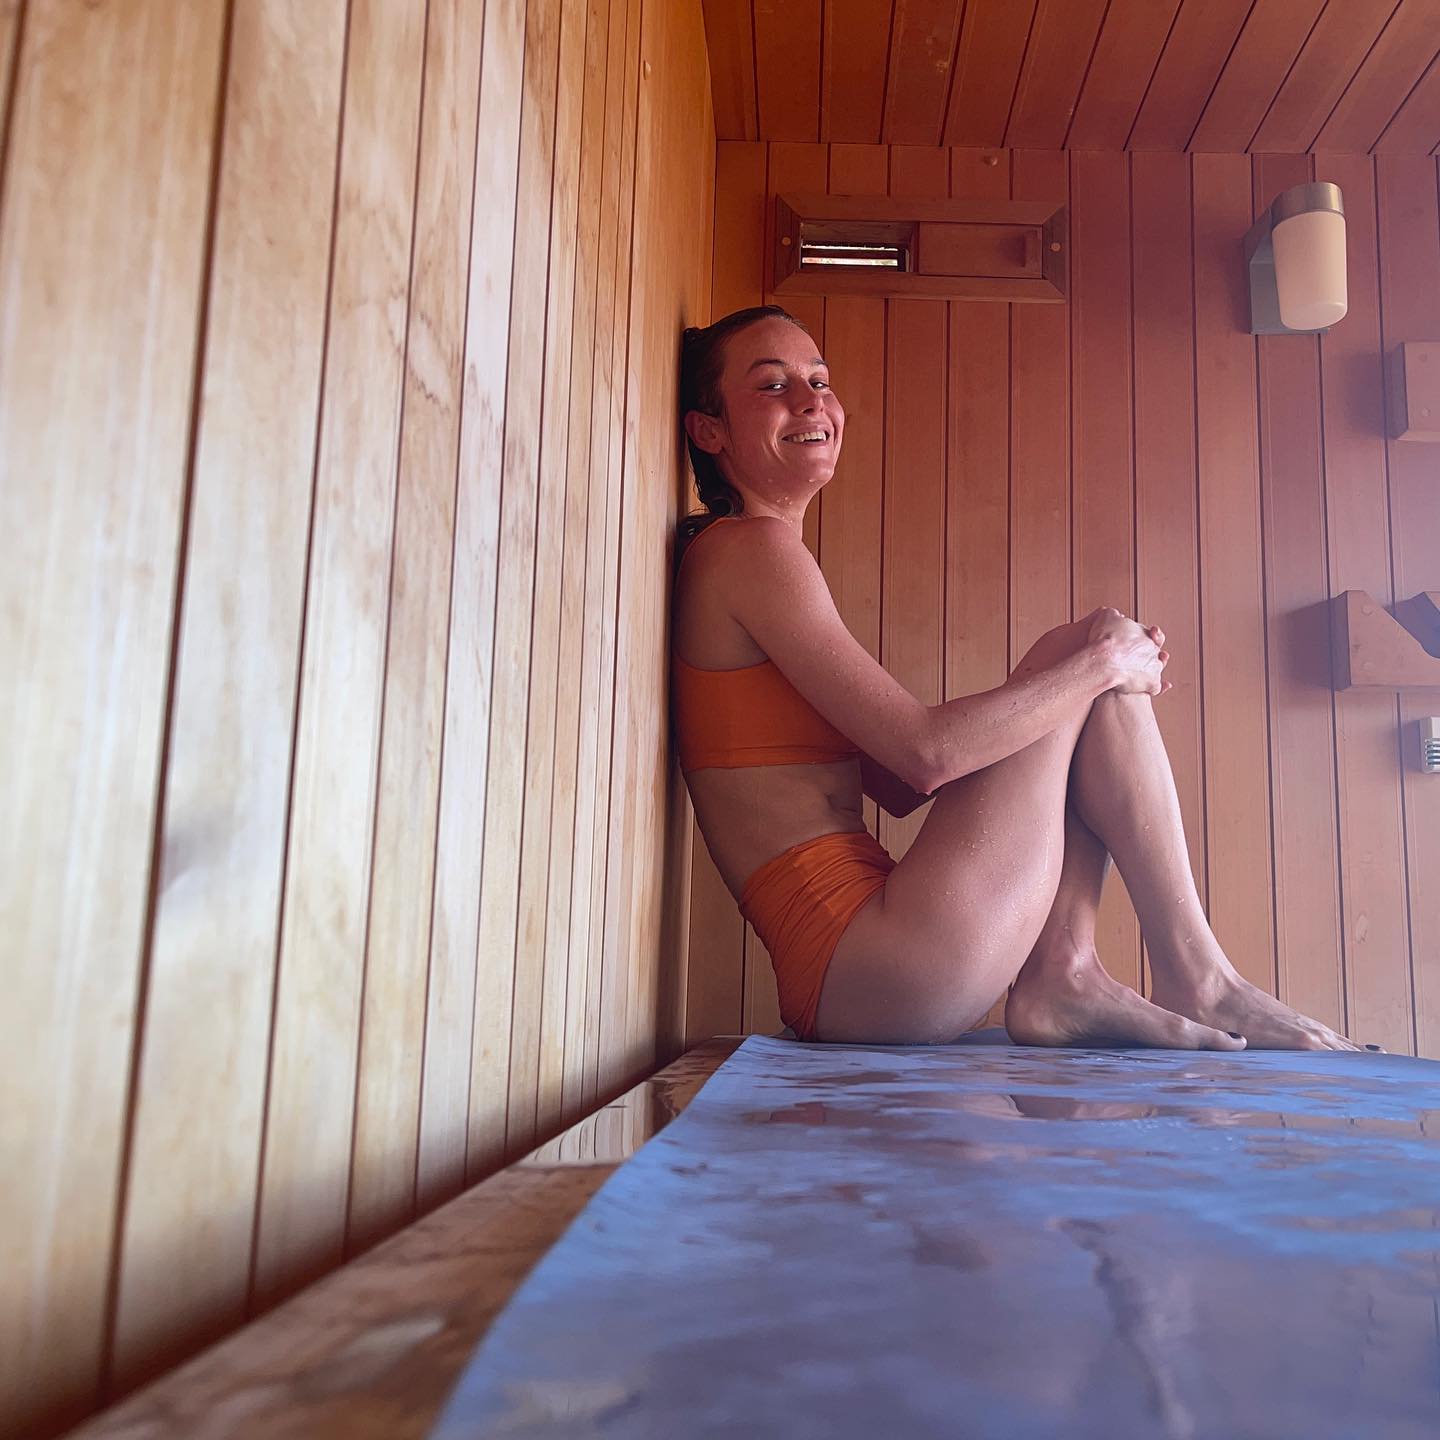 Photos n°3 : Brie Larson’s Sauna Session!